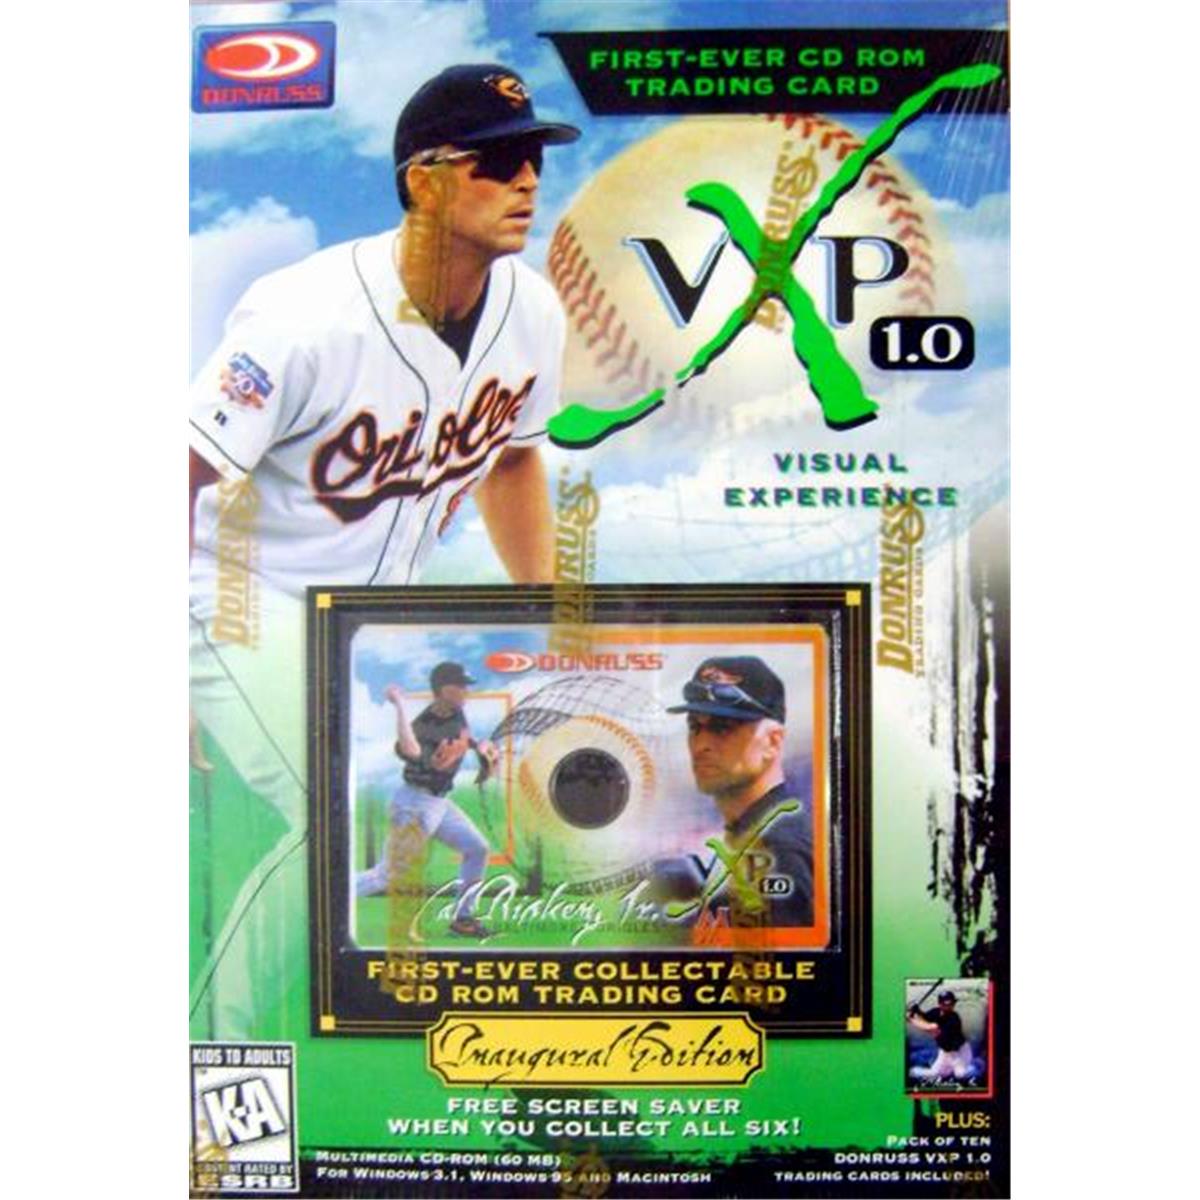 443699 Baltimore Orioles 1997 Donruss VXP 1.0 Cal Ripken Junior CD Rom Trading Card Baseball Card -  Autograph Warehouse